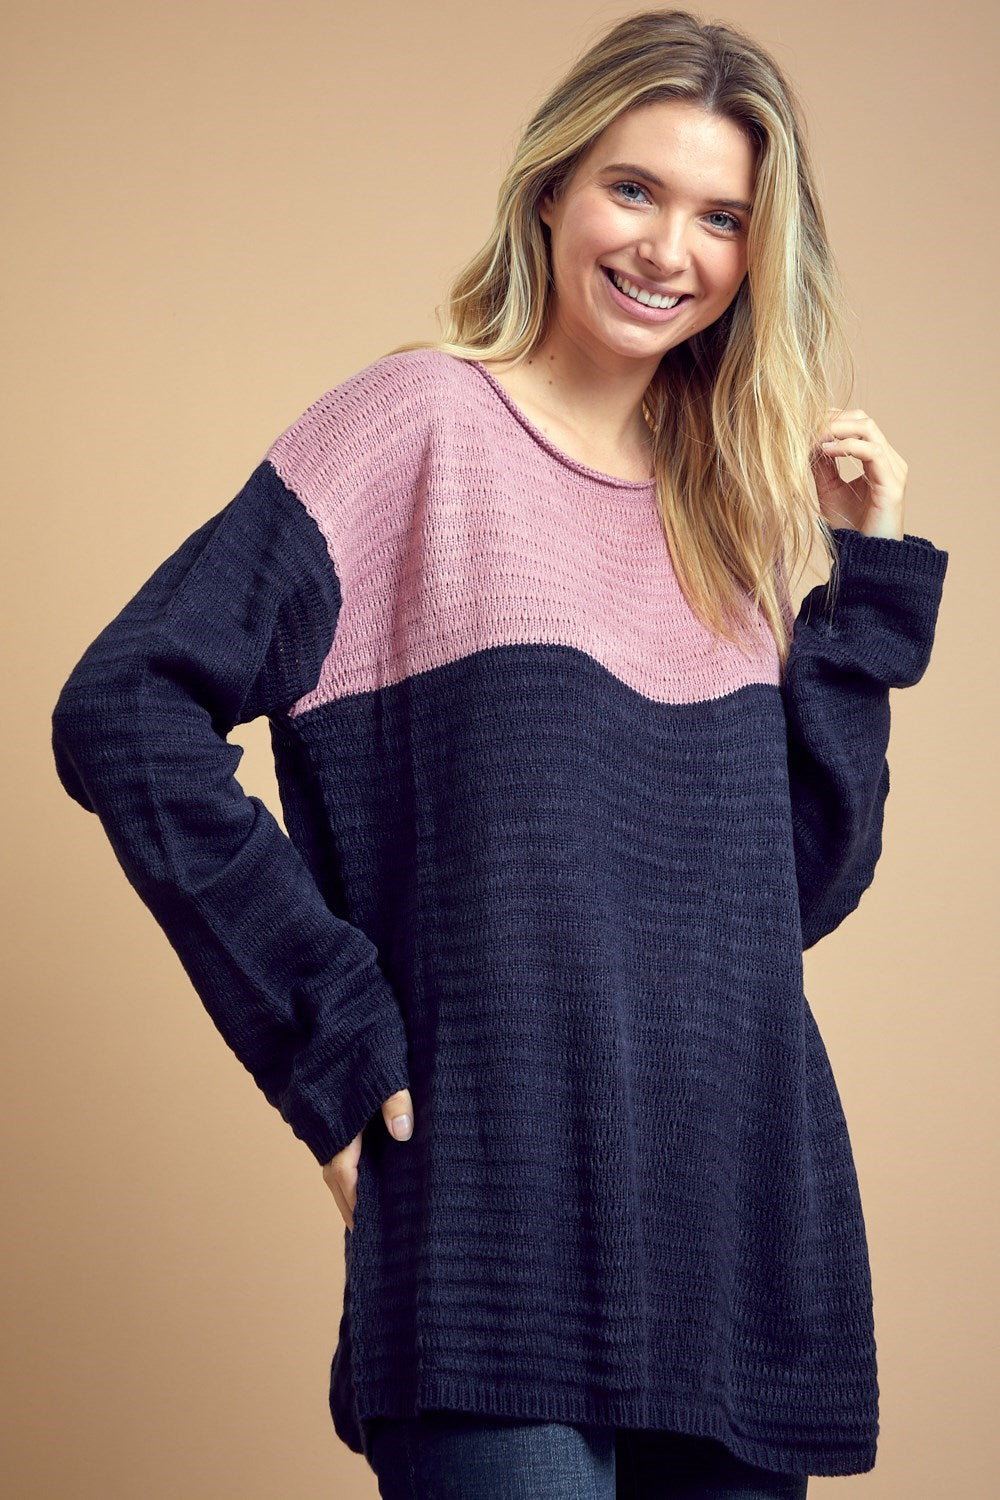 Comfy Sweater Top 7893